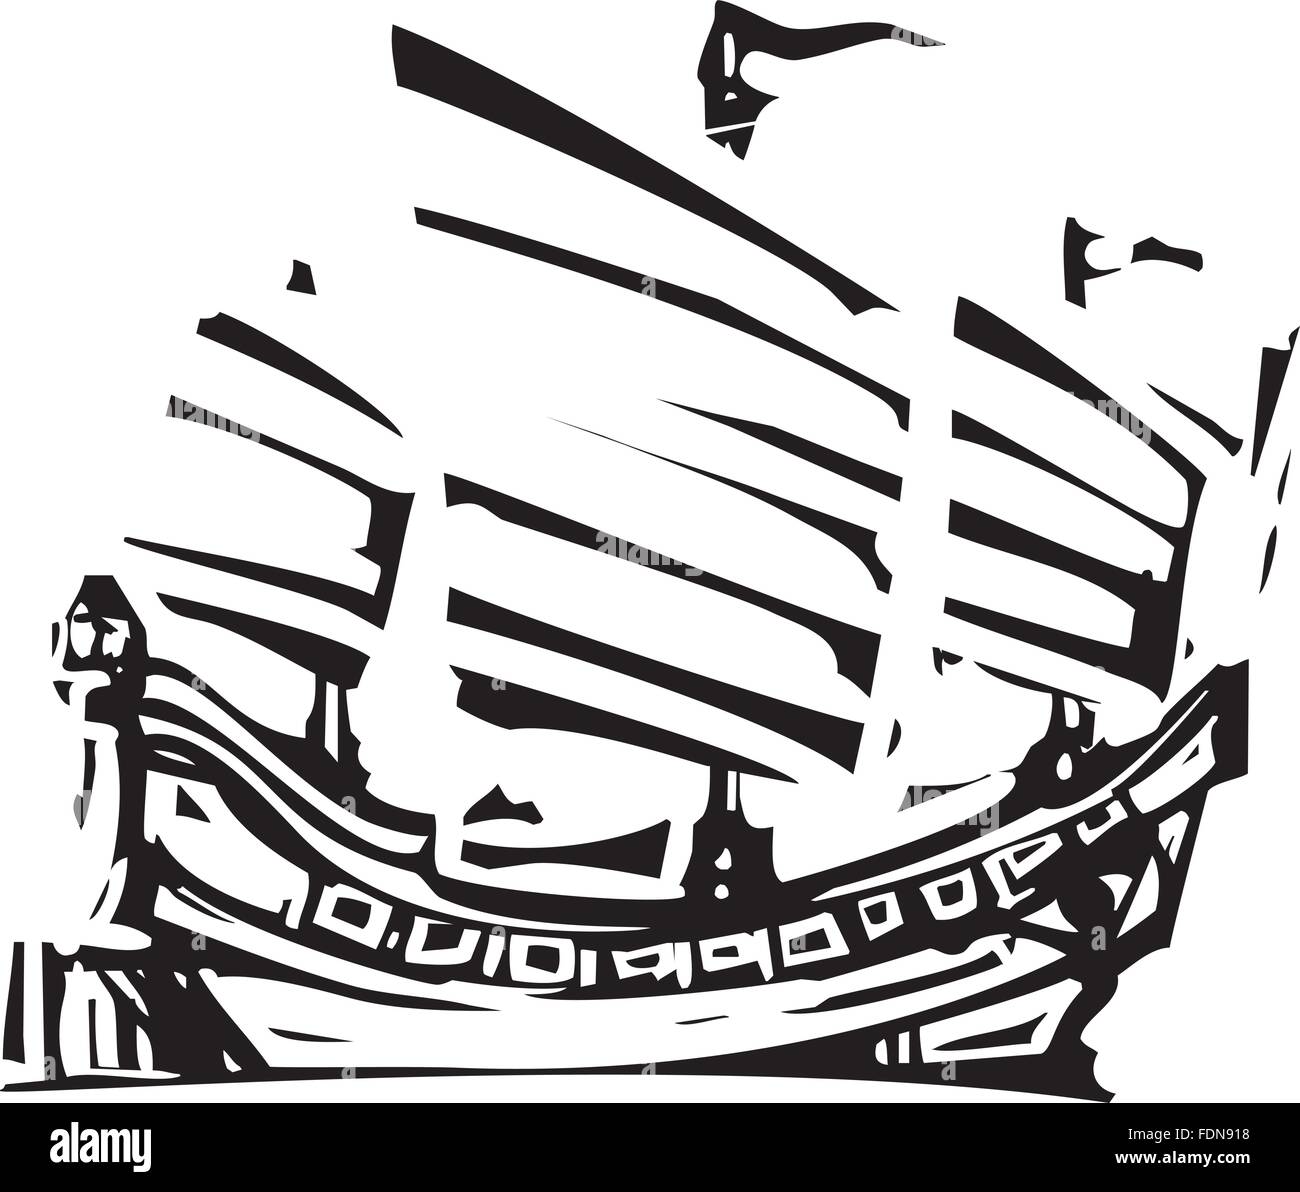 Holzschnitt-Stil Bild des chinesischen Segelschiff Junk-e- Stock Vektor